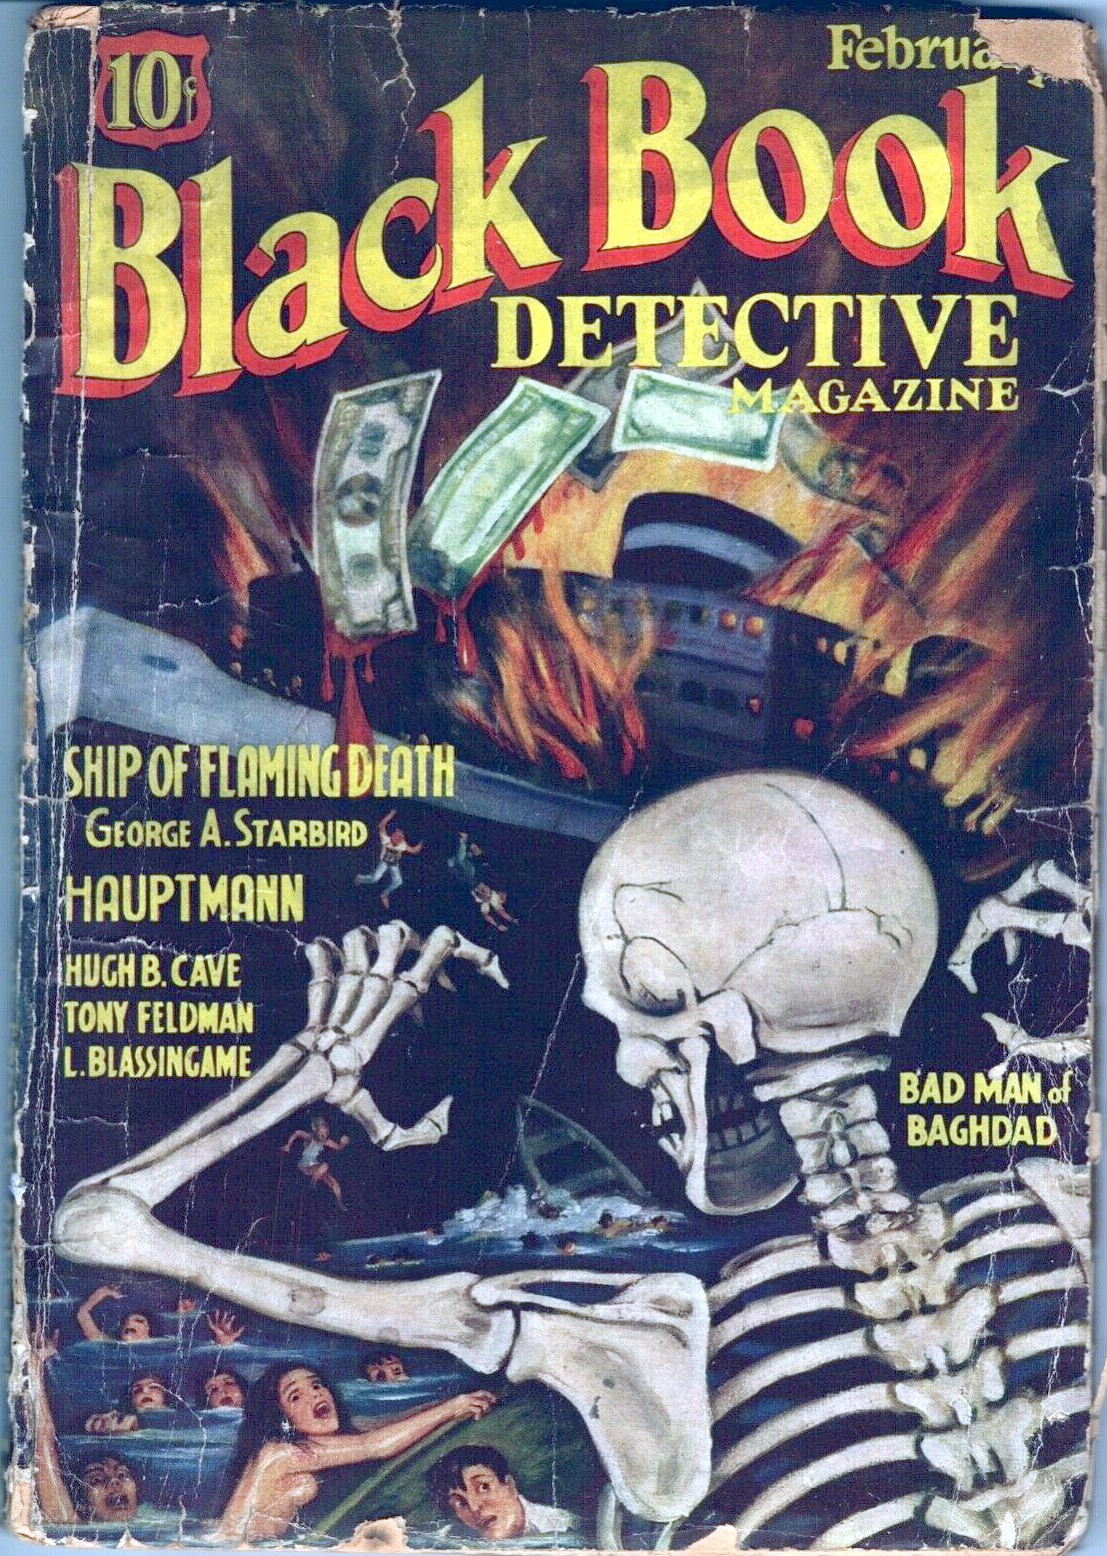 Black Book Detective - February 1935